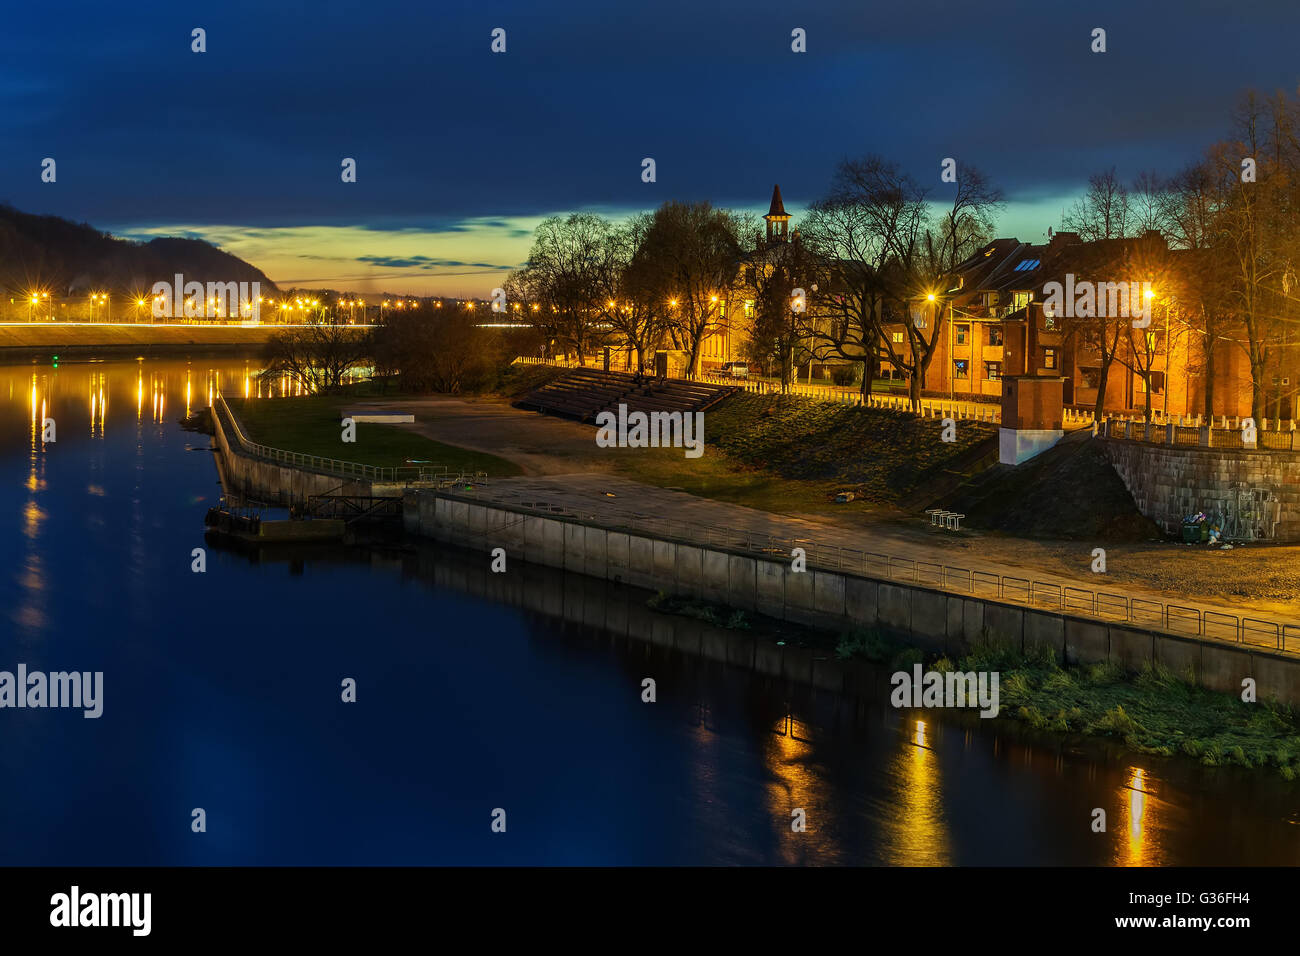 Kaunas, Lithuania: Old Town at night Stock Photo